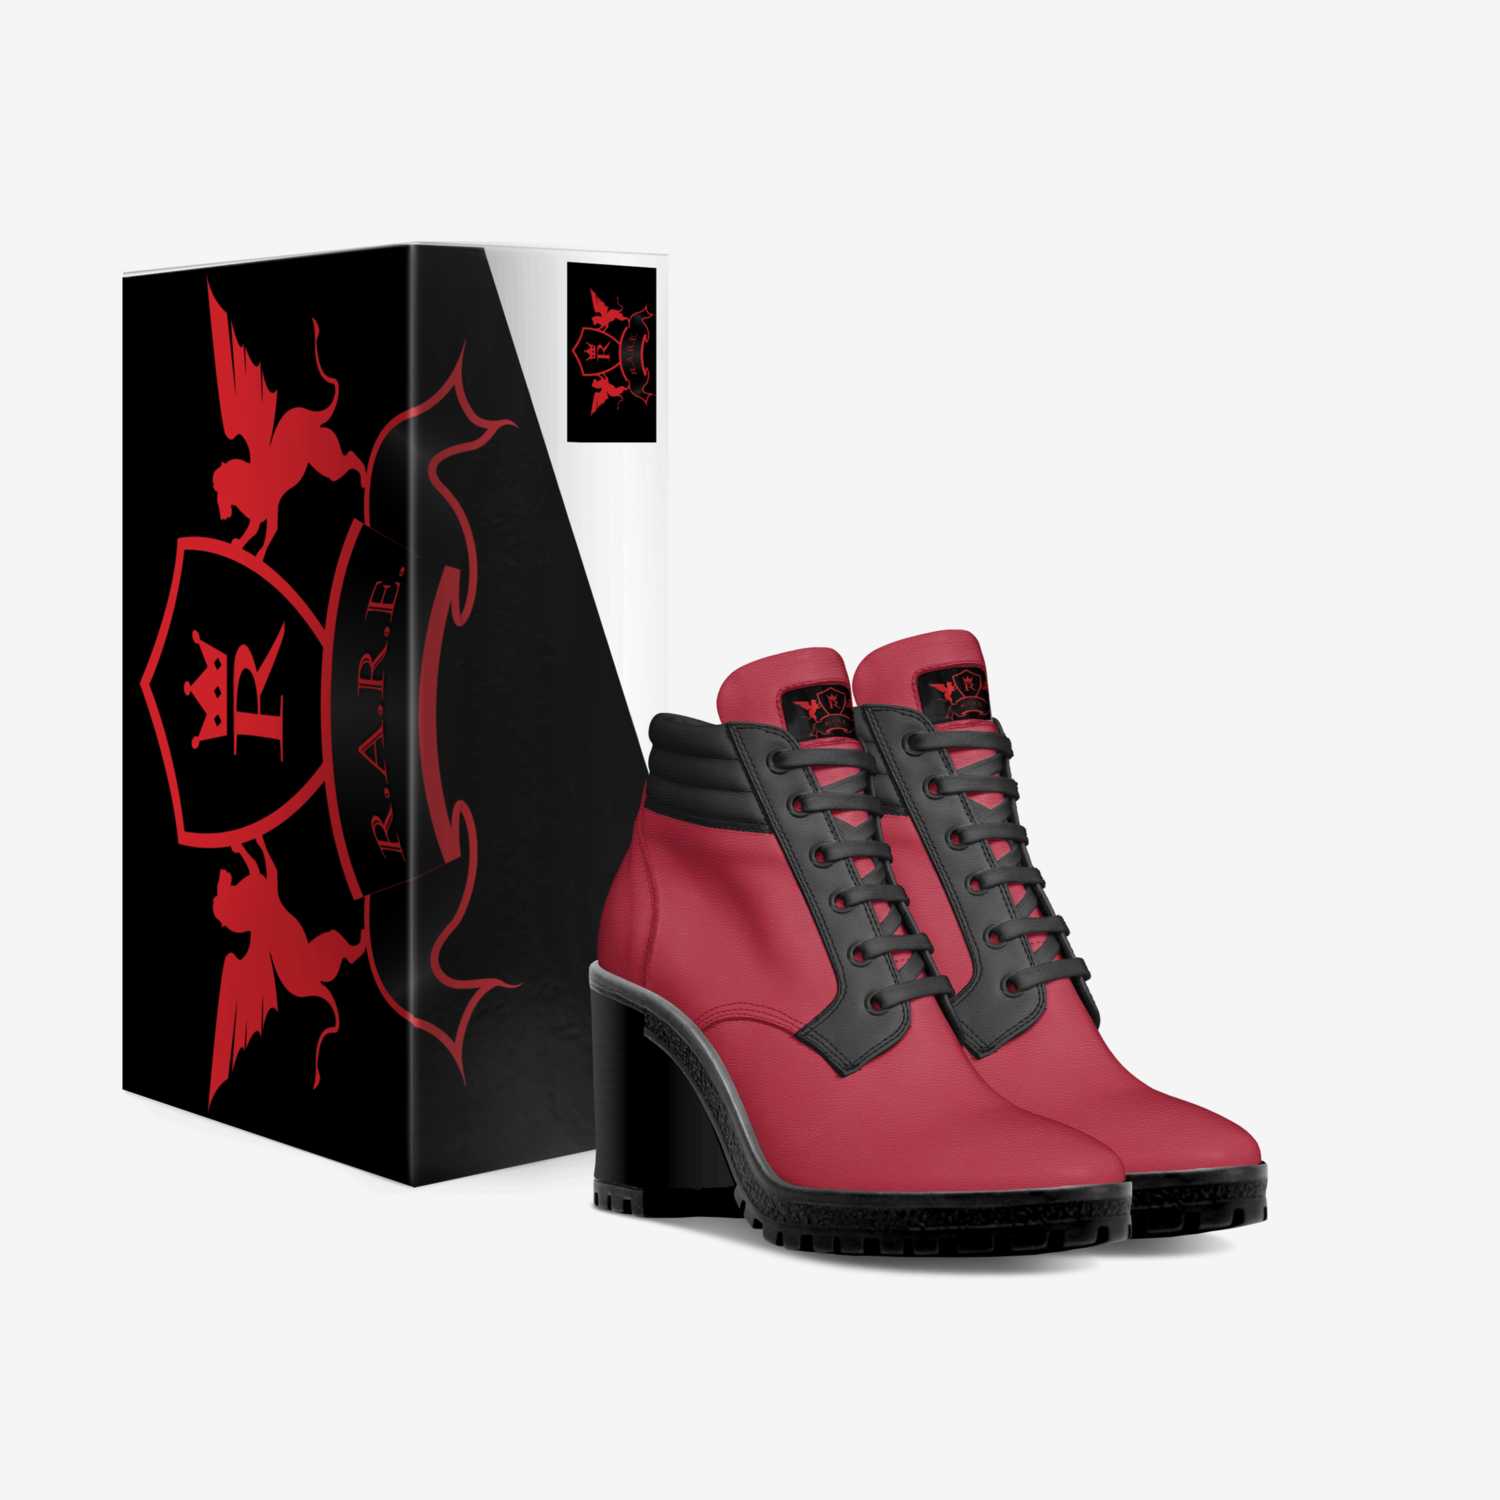 REDDWOMAN II custom made in Italy shoes by John A. Annan | Box view